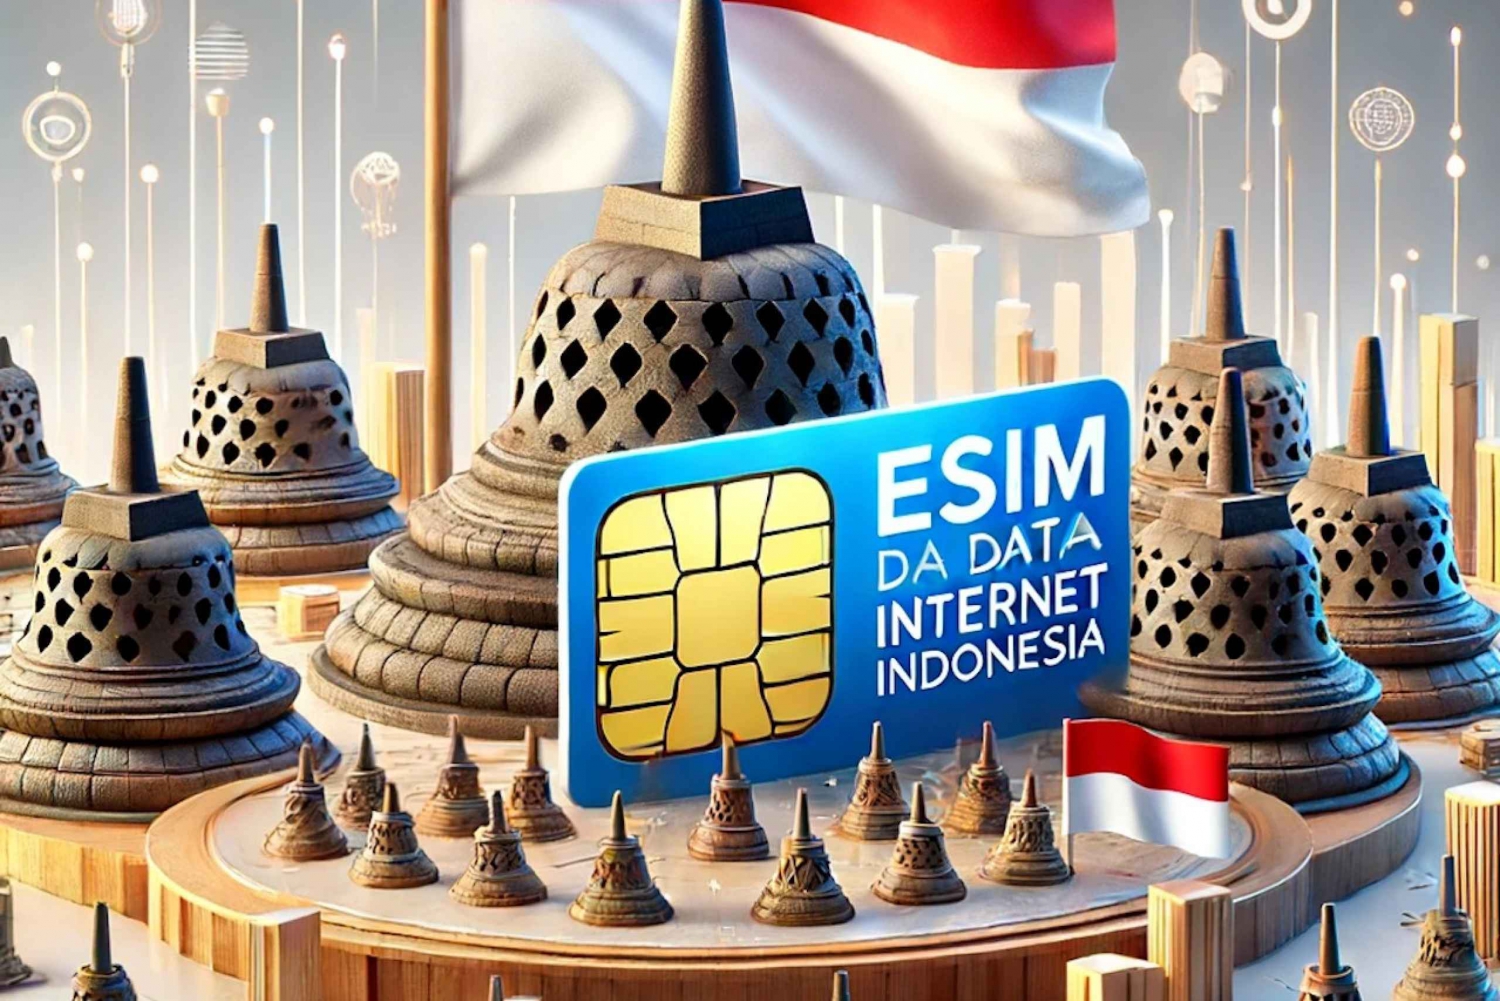 Indonesia: eSIM Jakarta Internet Data Plan for 4G/5G